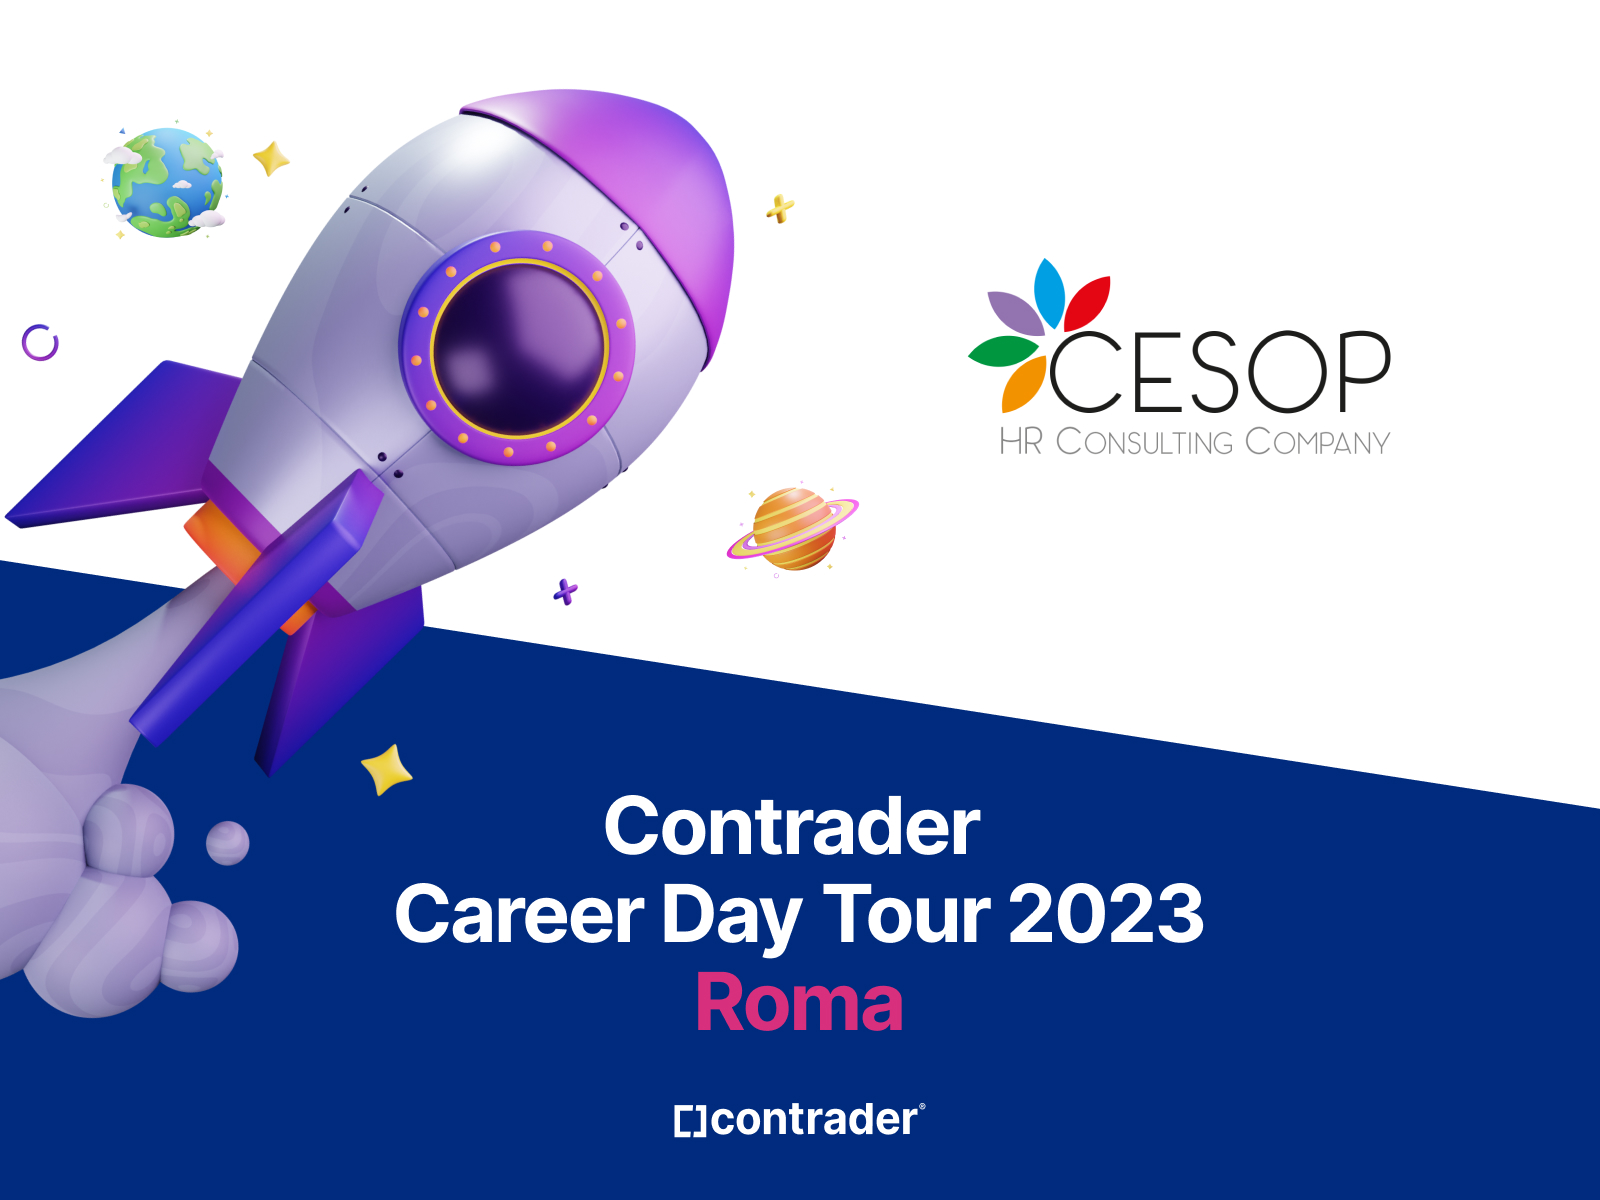 Contrader chiude il Career Day Tour 2023 al Job Meeting di Roma